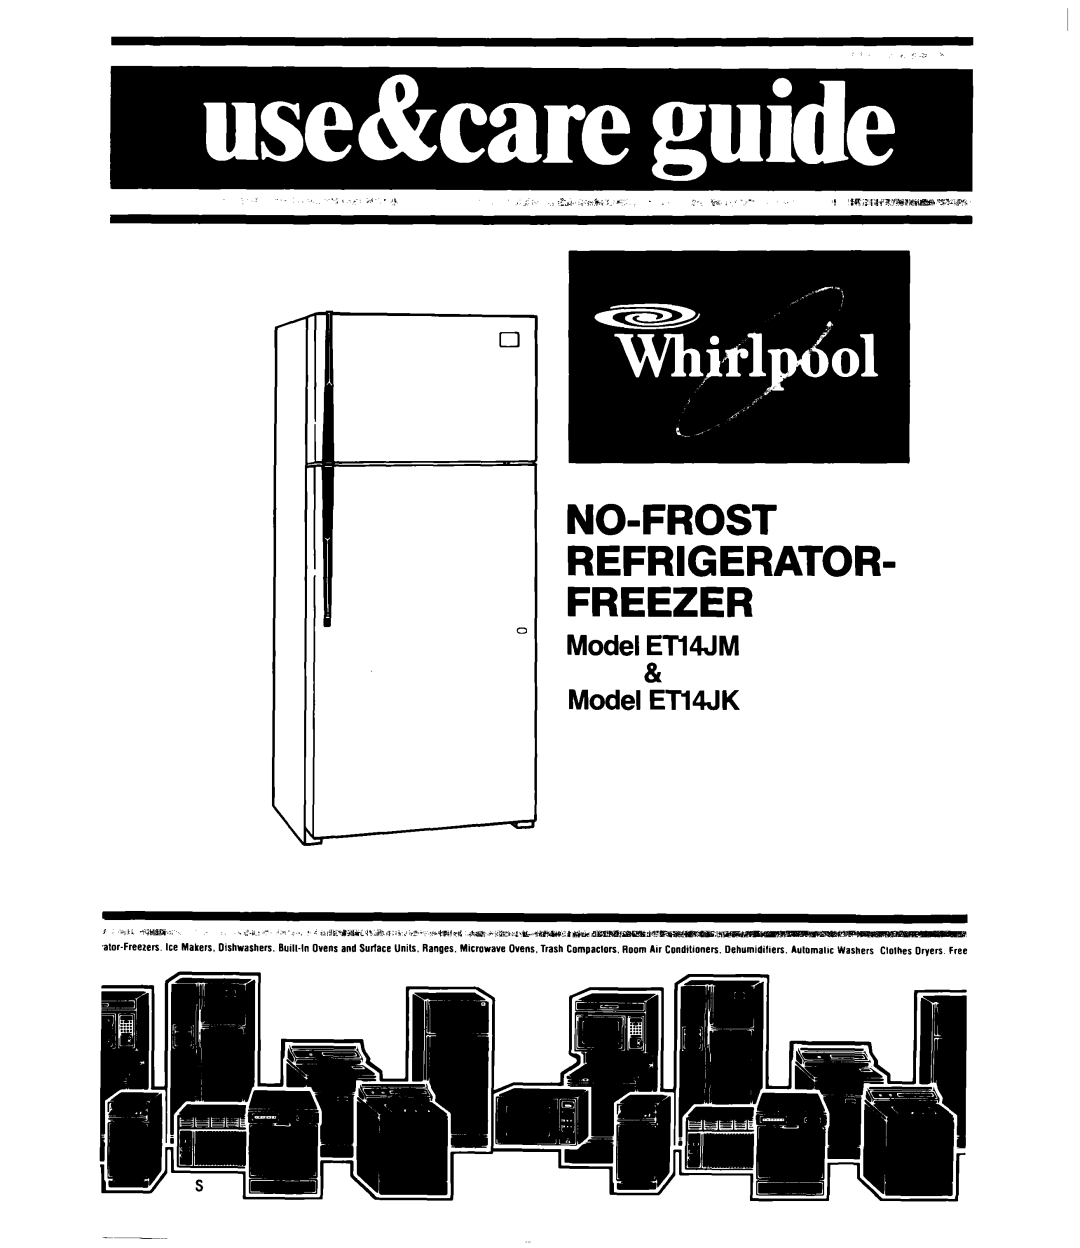 Whirlpool manual Model ETl4JM & Model ETl4JK, No-Frost Refrigerator Freezer, wFree2ers, Room Au Condilioners 